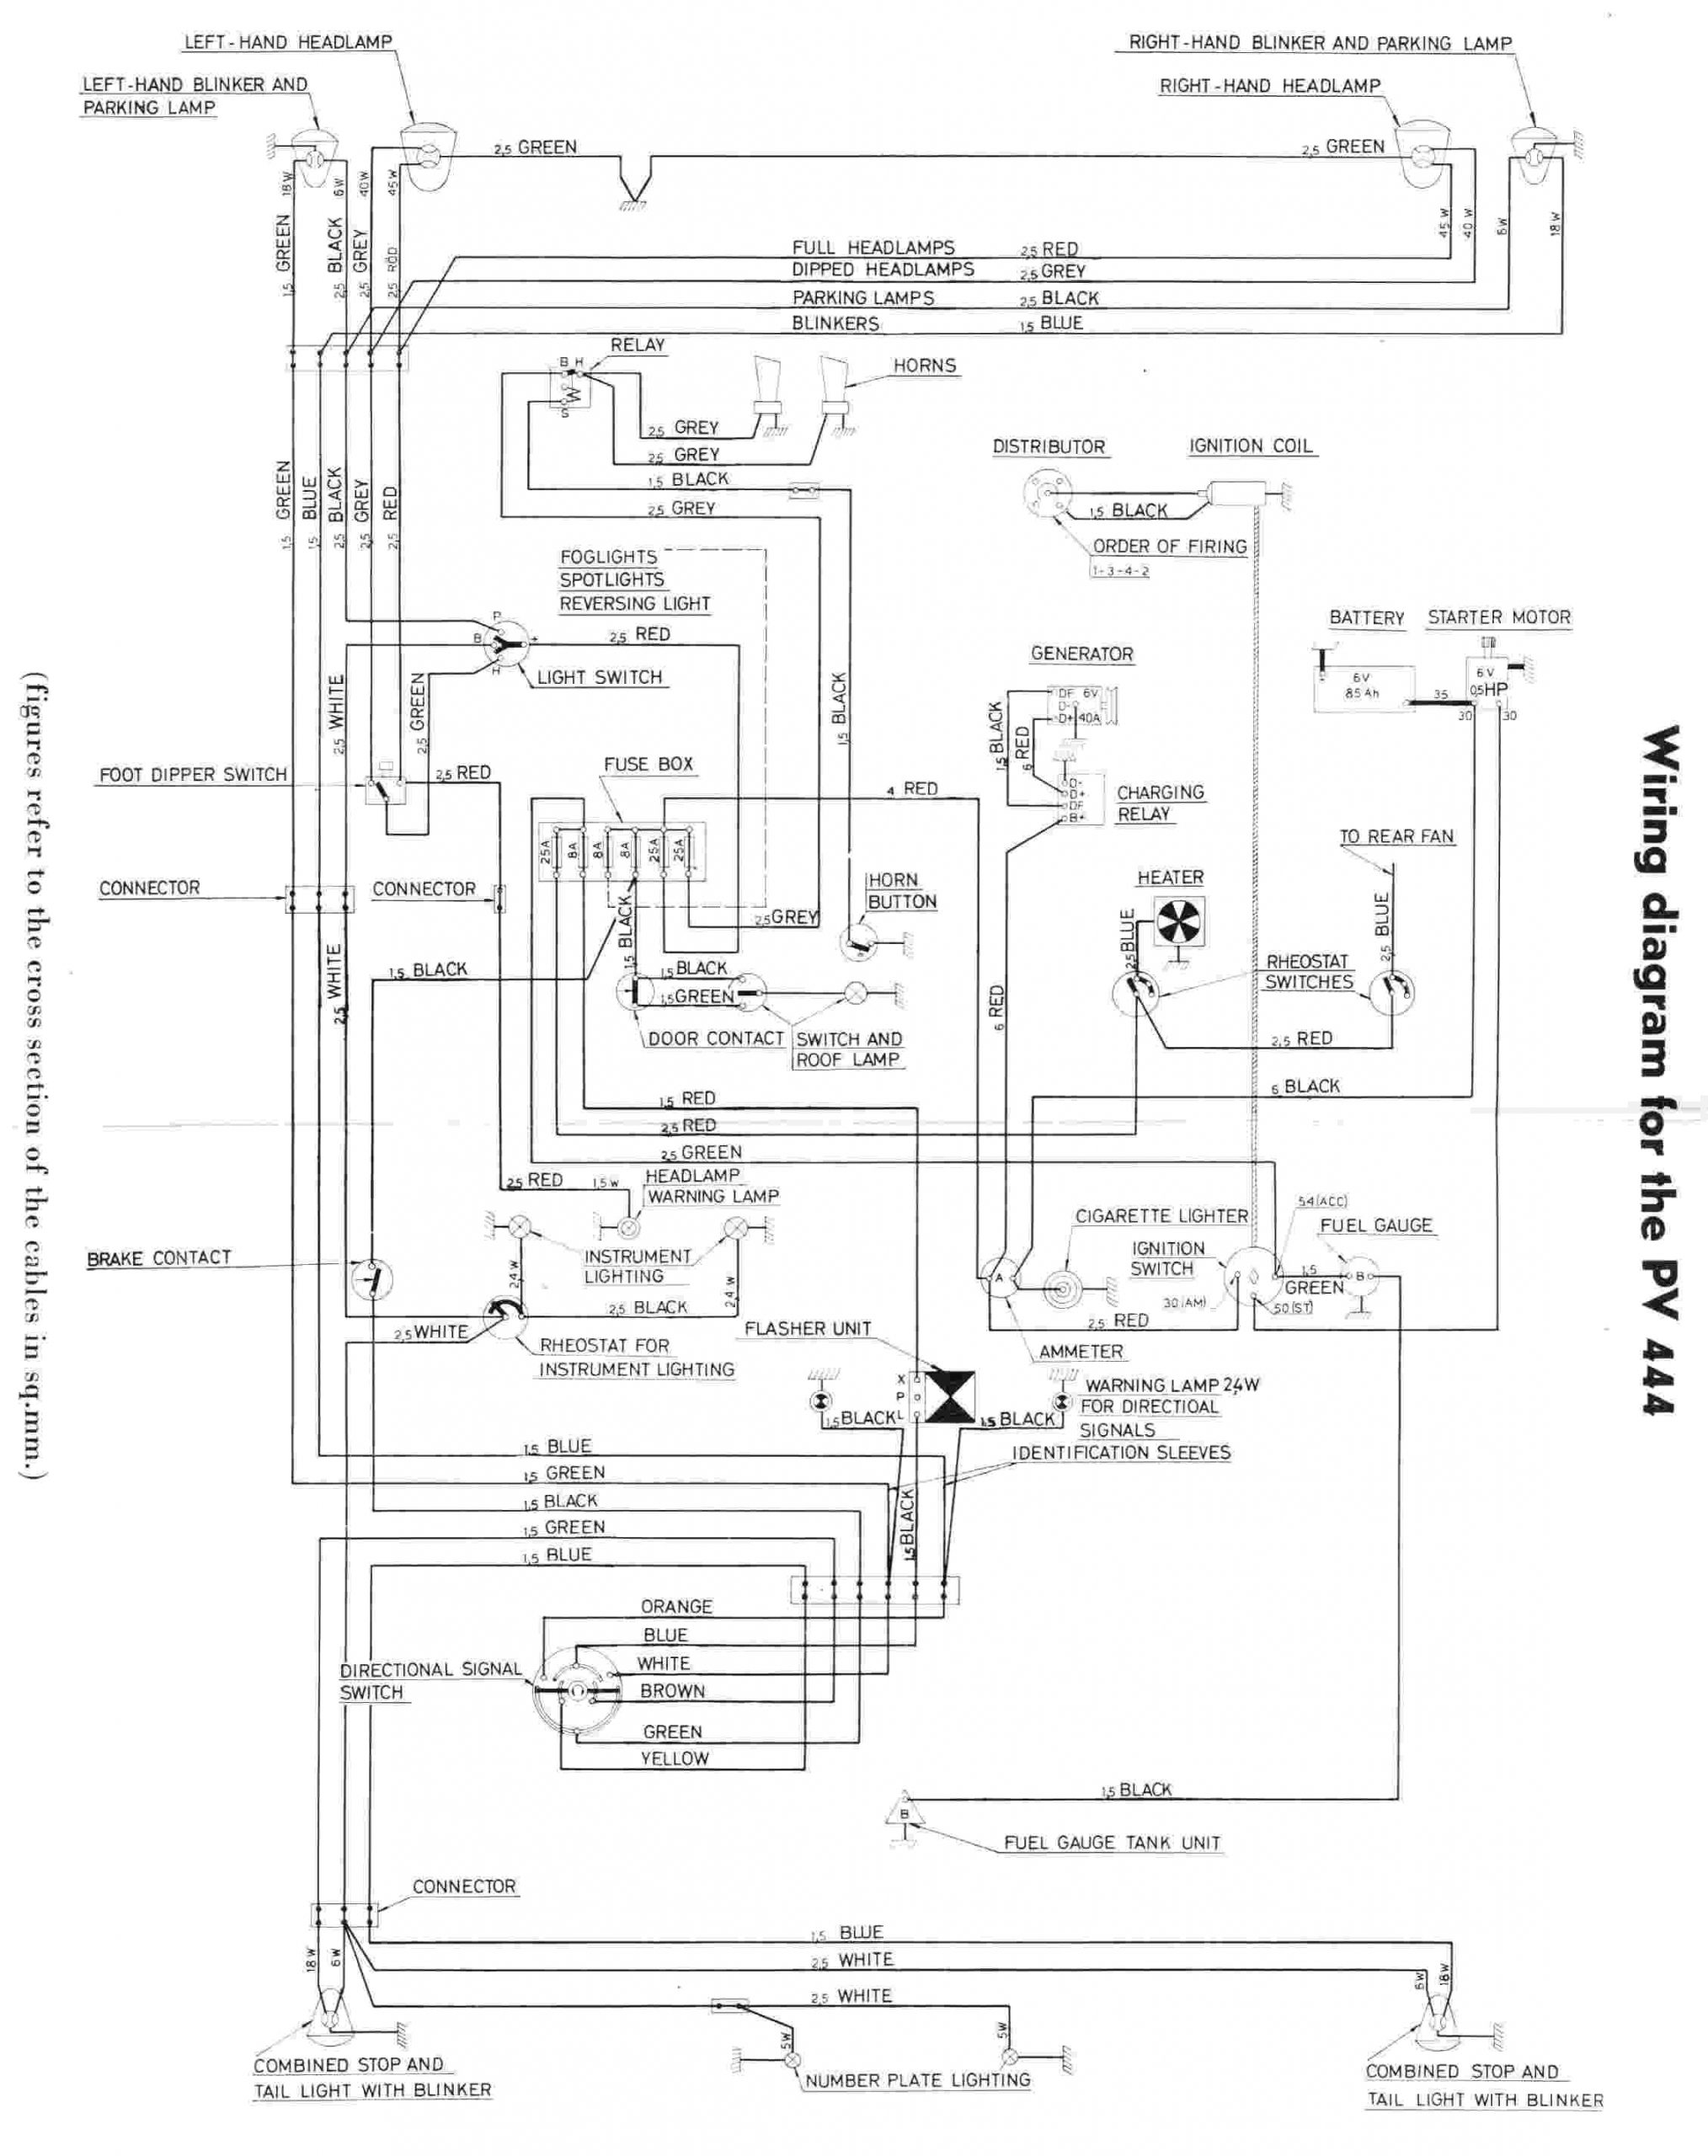 Volvo Hybrid Electrical Wiring Diagram Volvo – Car Pdf Manual, Wiring Diagram & Fault Codes Dtc Of Volvo Hybrid Electrical Wiring Diagram